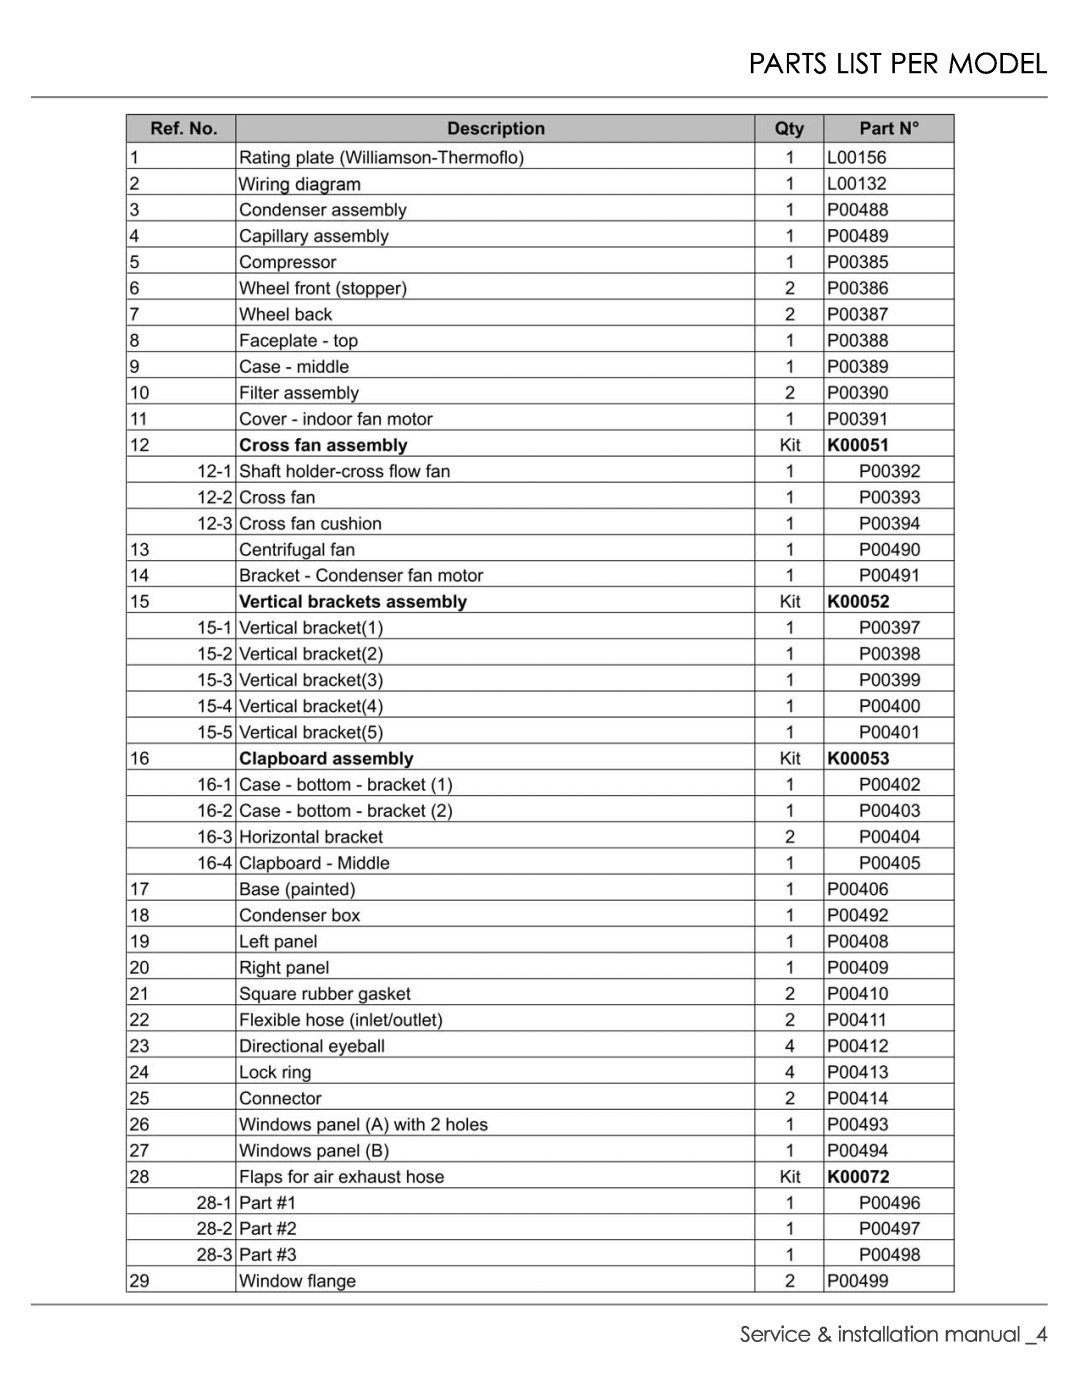 Alpine 12PRA Parts List Per Model, Service & installation manual 